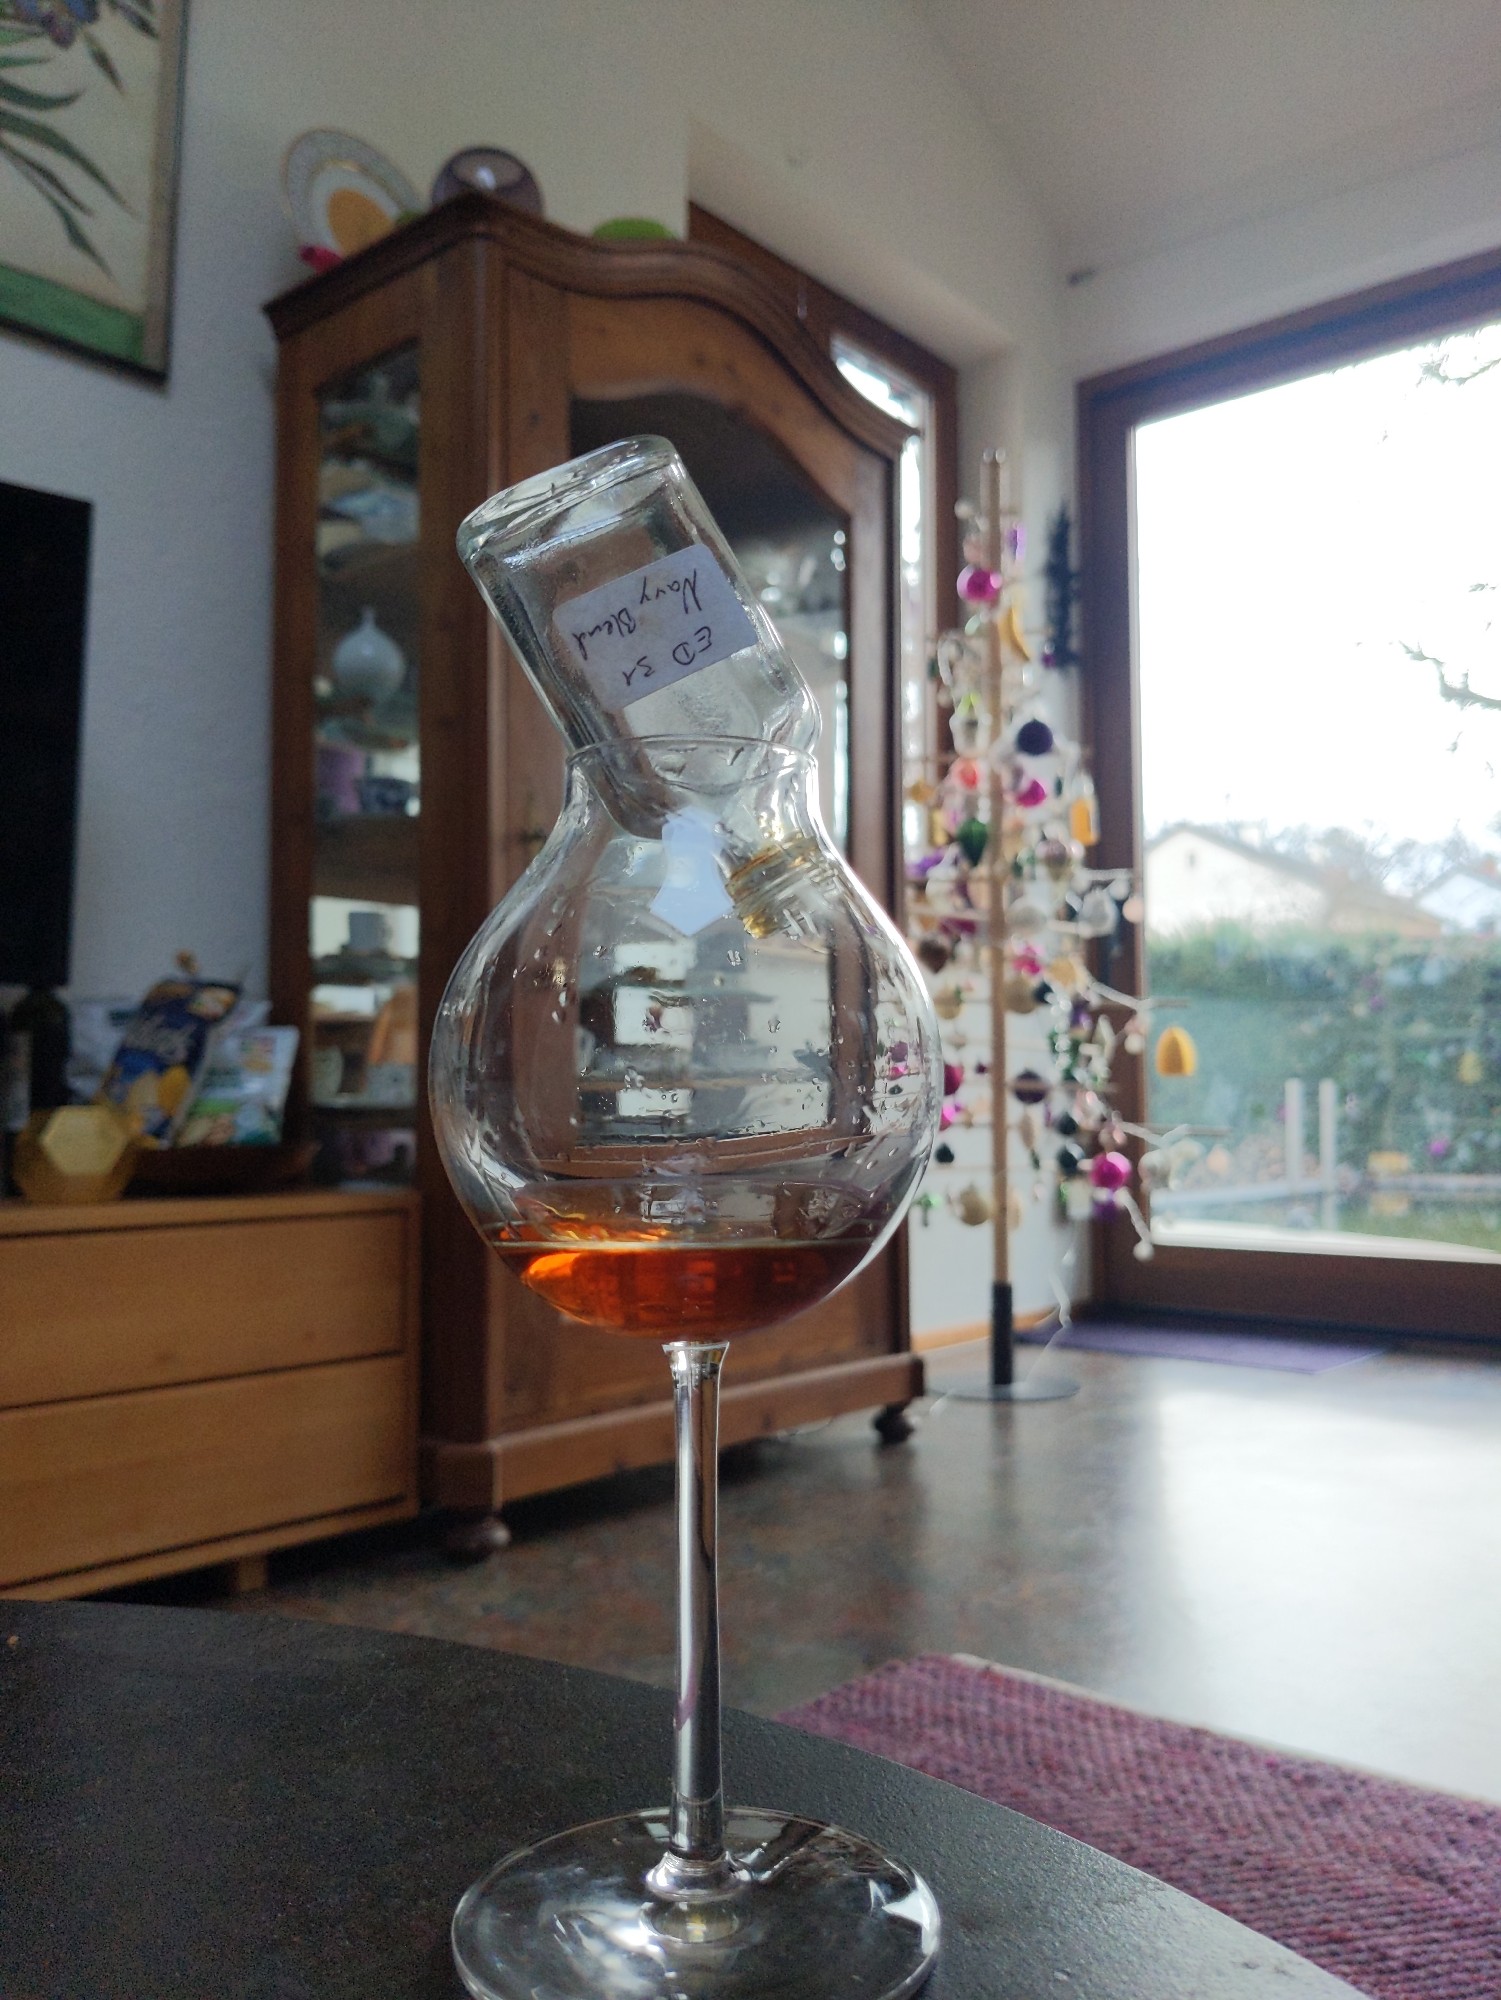 Photo of the bottle taken from user crazyforgoodbooze